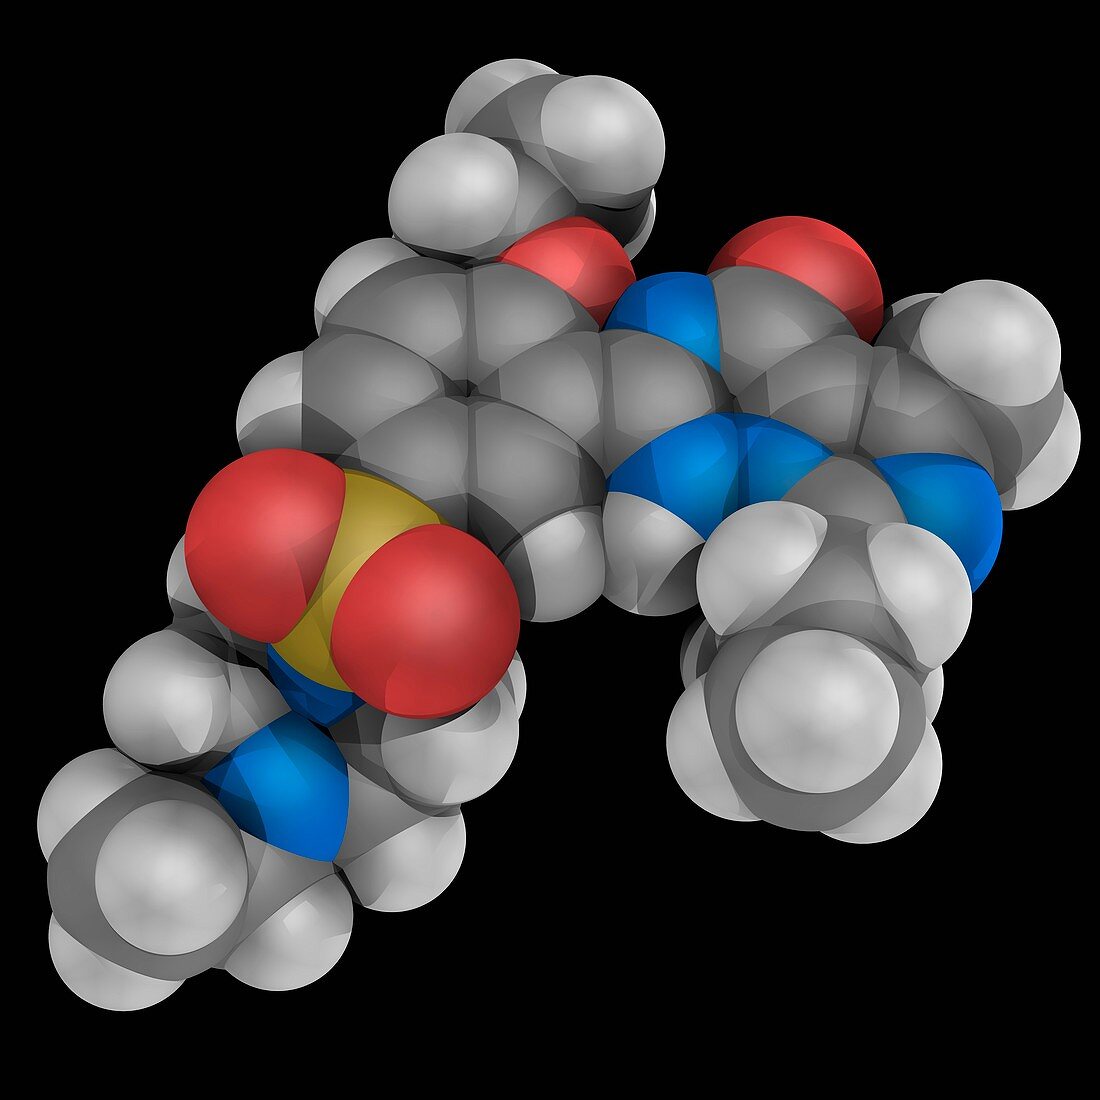 Vardenafil drug molecule